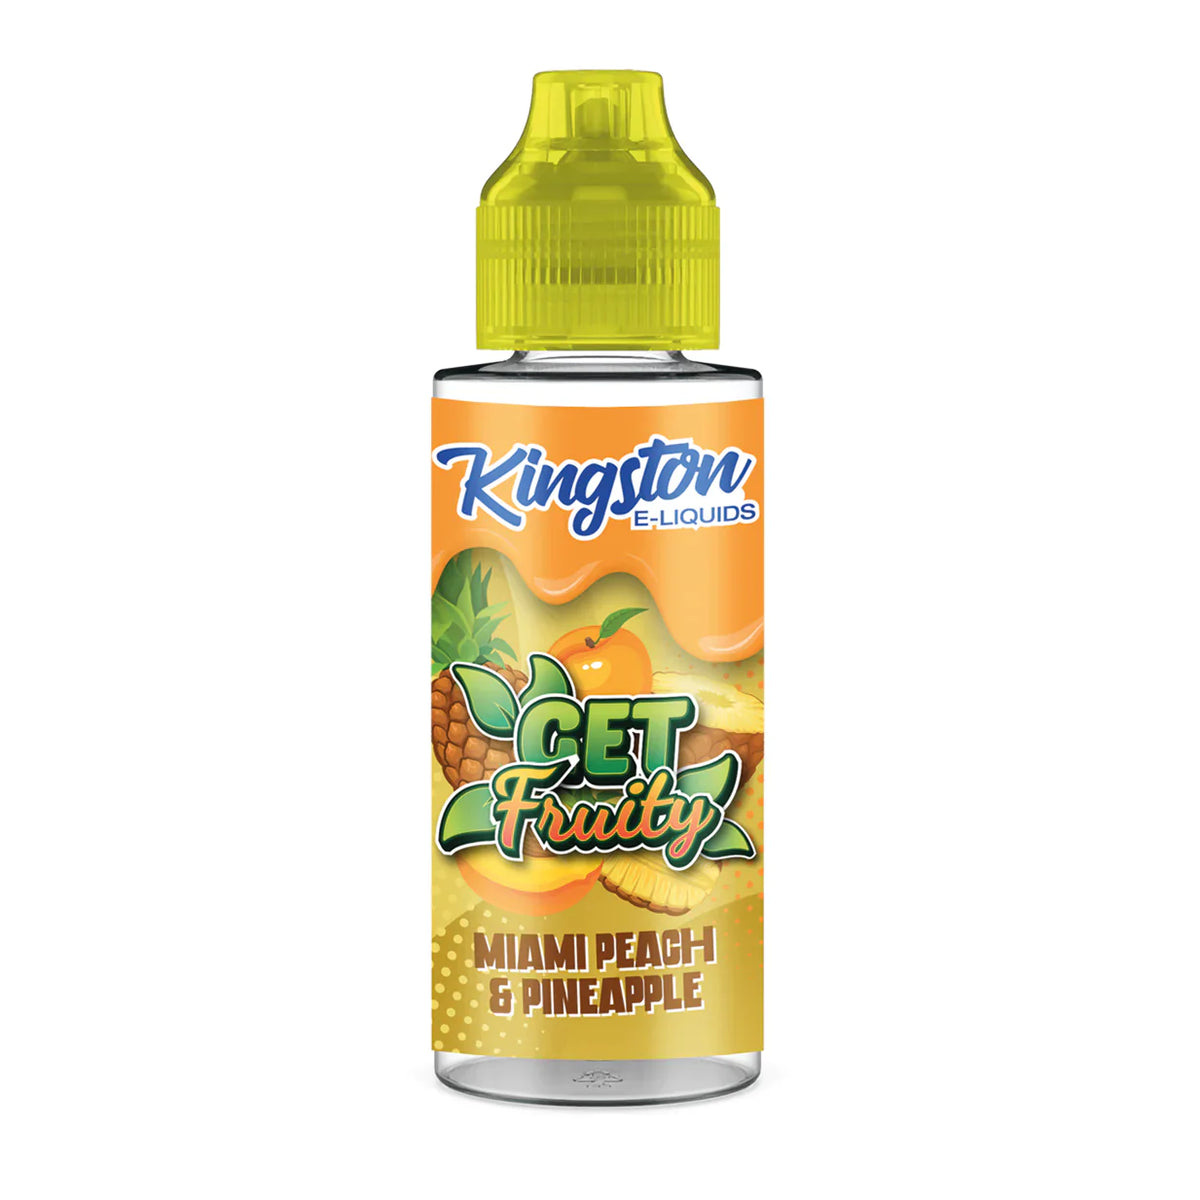 Wholesale - Kingston - Get Fruity - Miami Peach Pineapple - 100ml